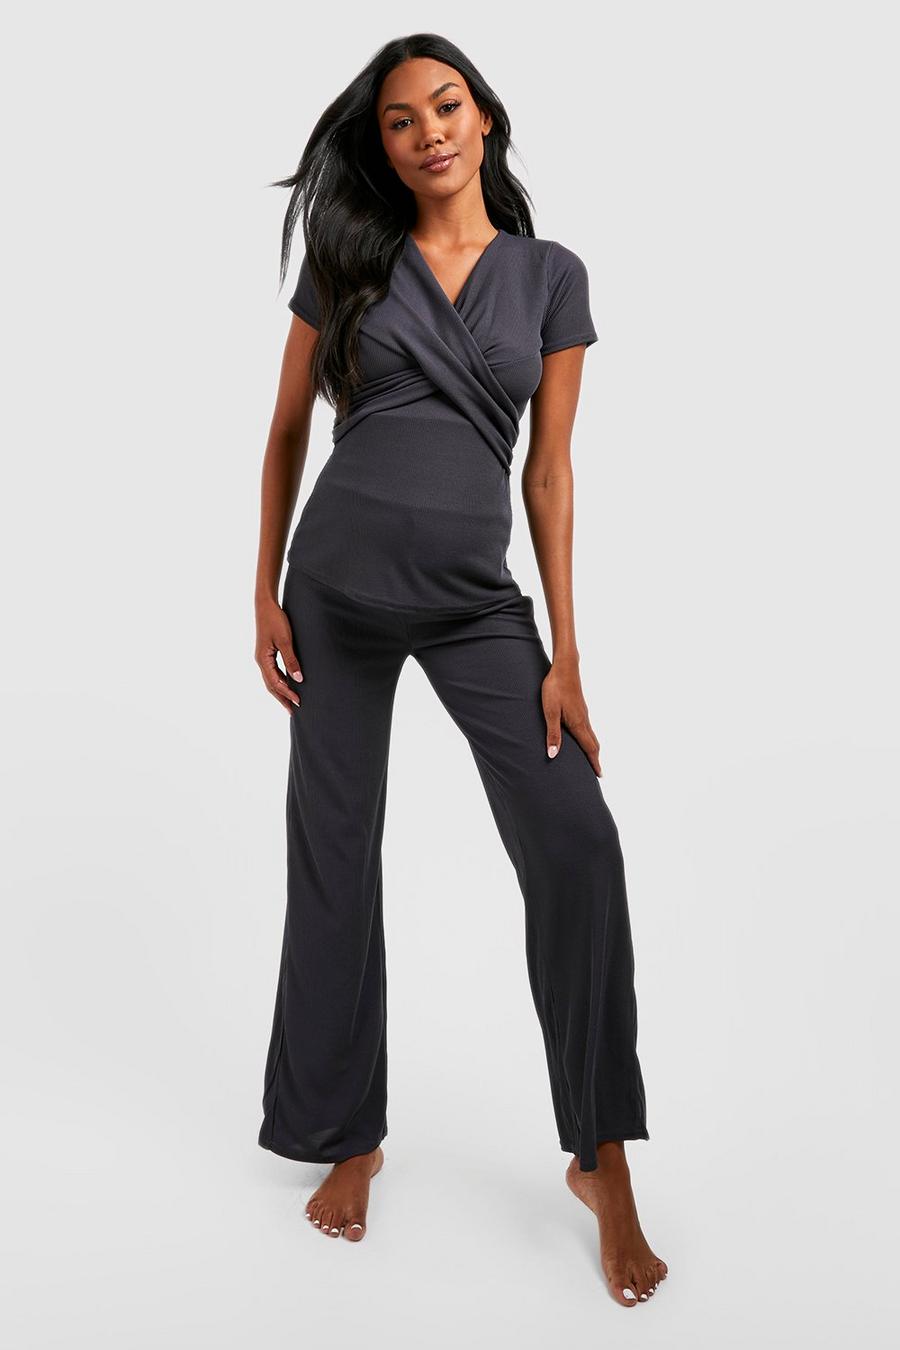 Charcoal grey Maternity Rib Wrap Nursing Pyjama Trouser Set